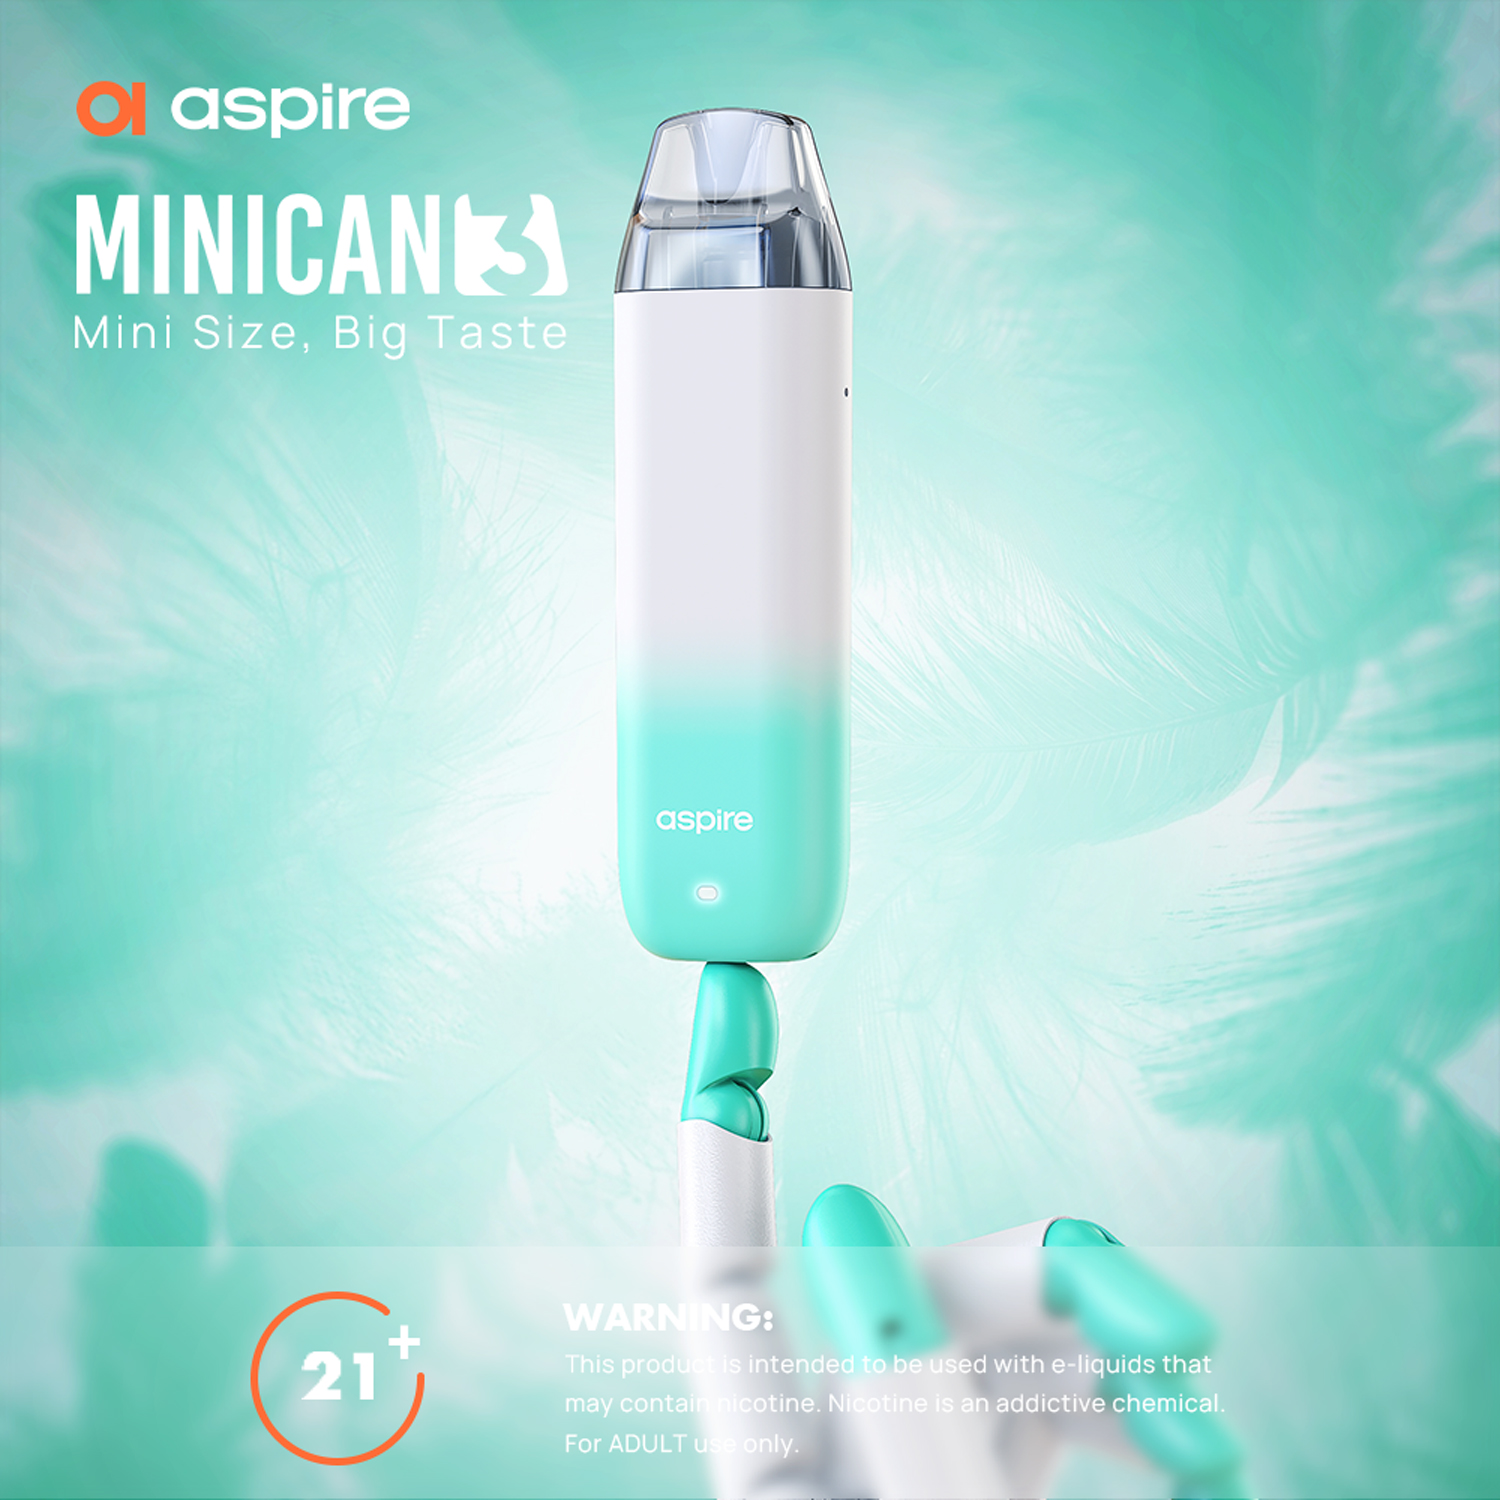 Aspire Minican 3 Pod Kit